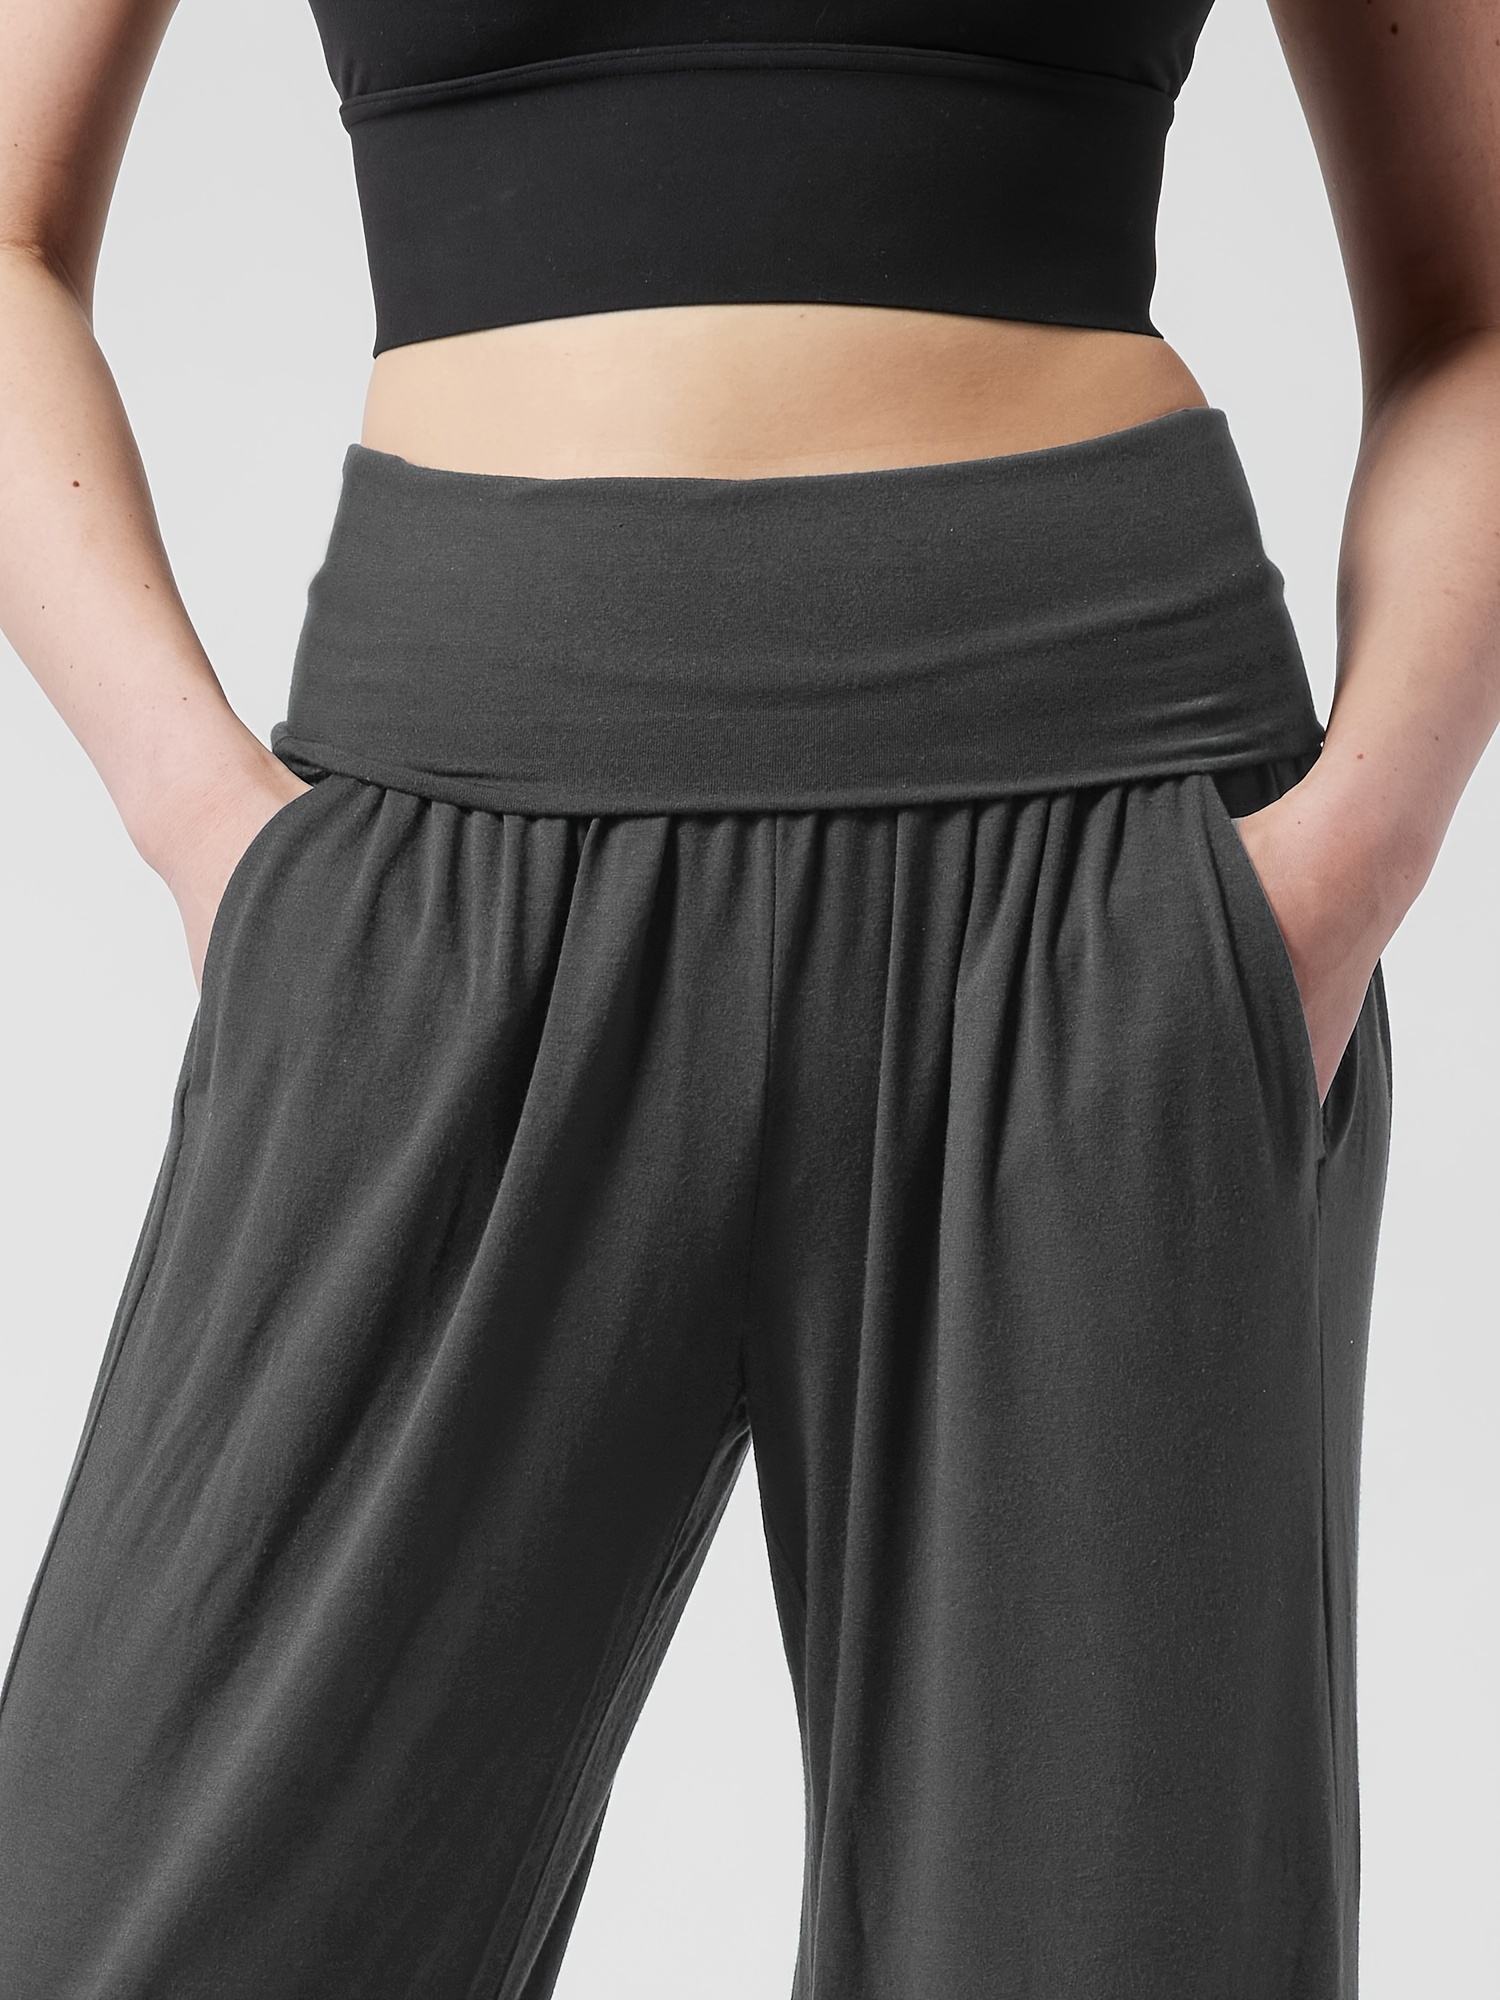 YWDJ Yoga Pants Pure Color High Waist Pocket Sports Fitness Yoga